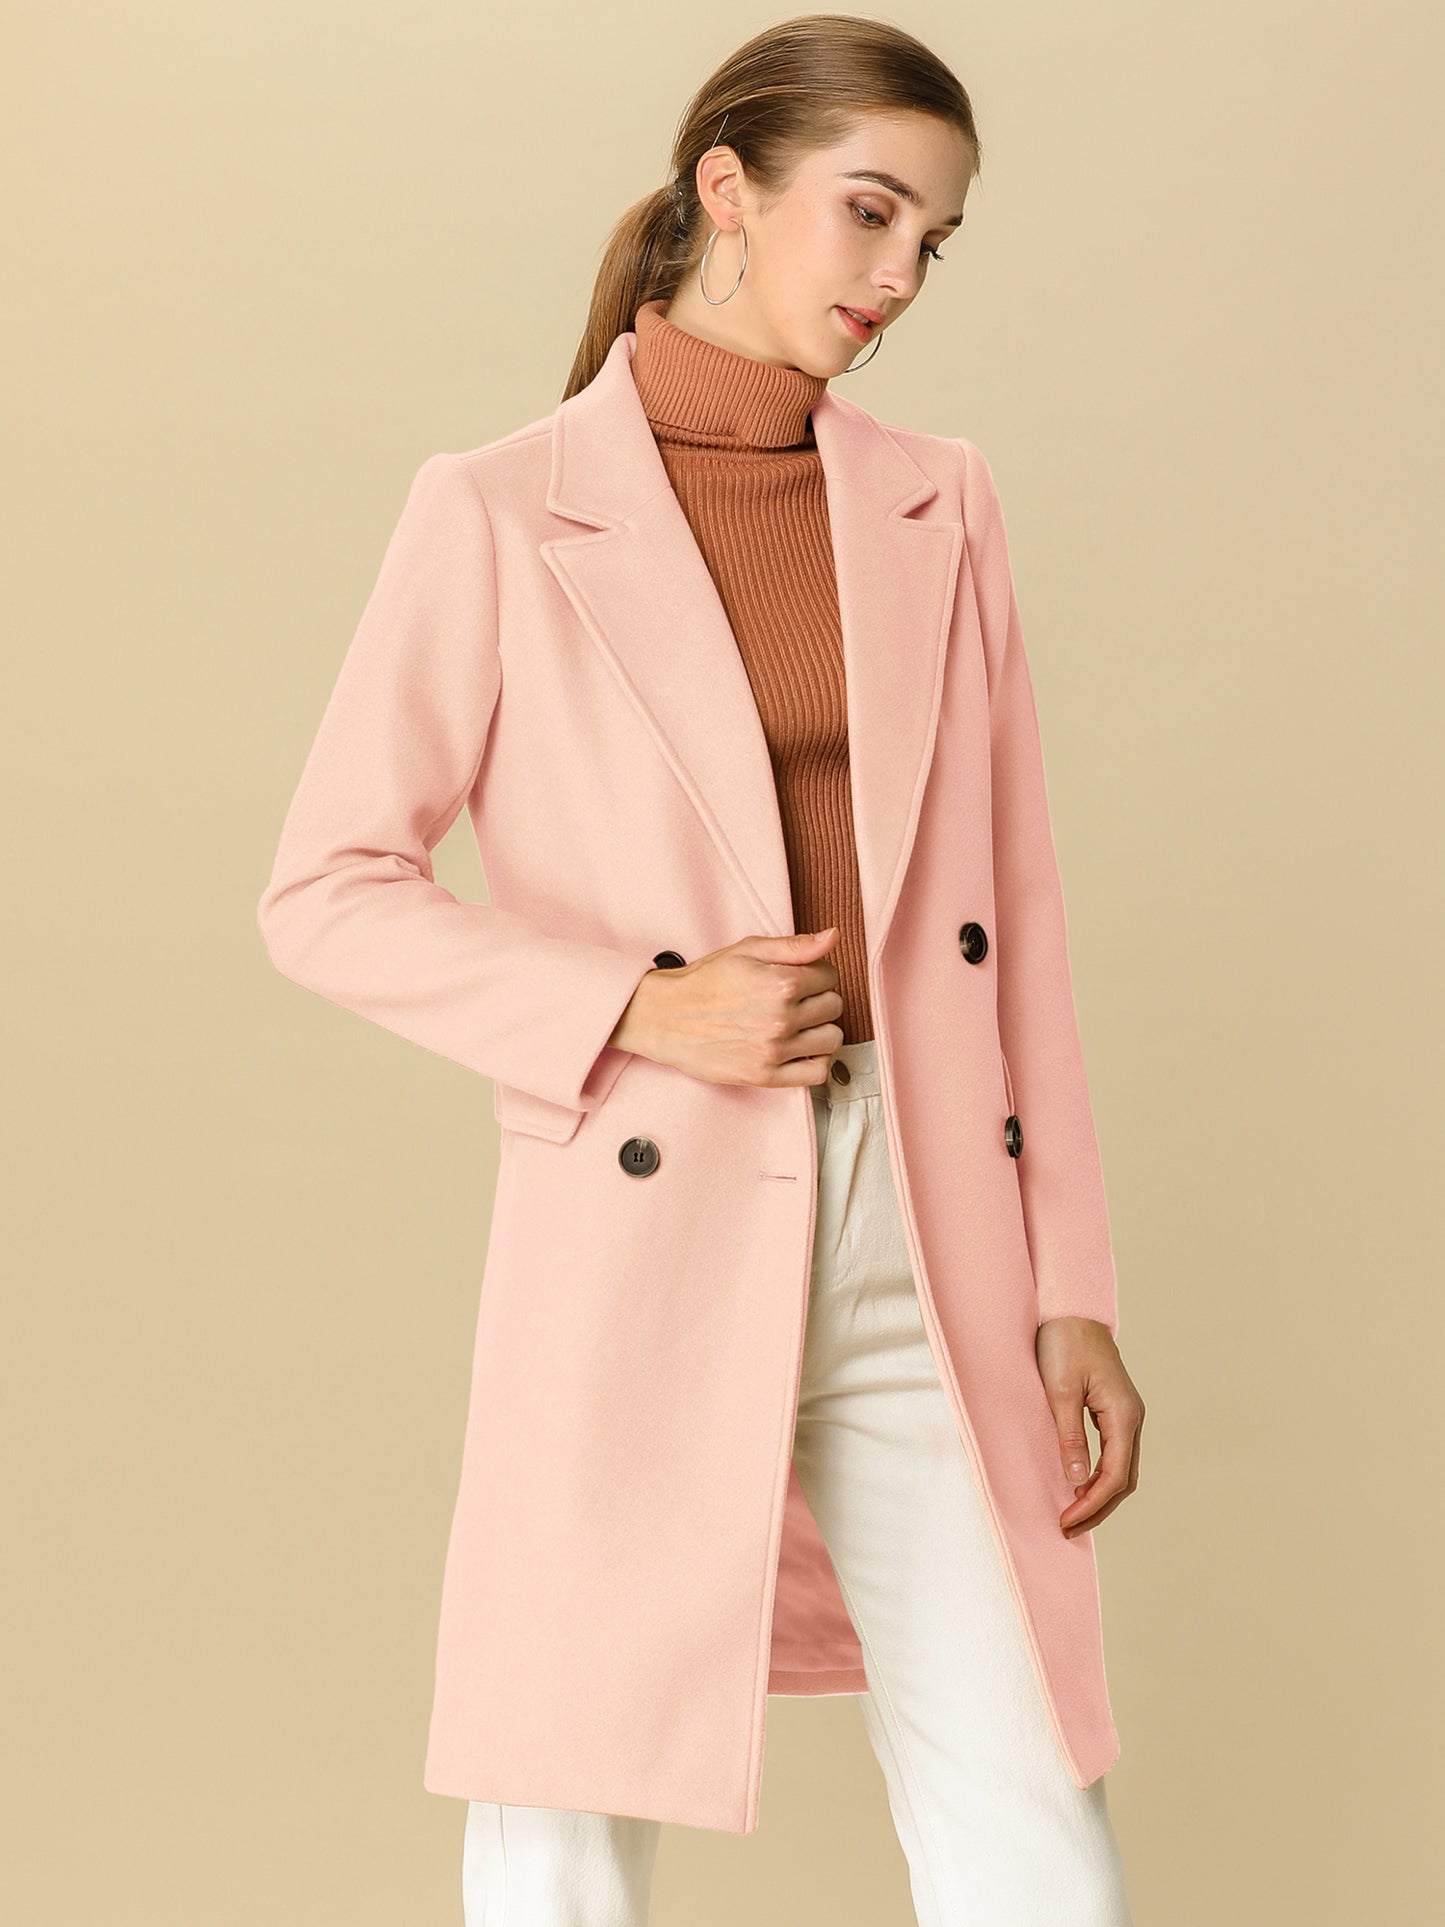 Allegra K Notch Lapel Double Breasted Belted Mid Long Outwear Winter Coat Light Pink